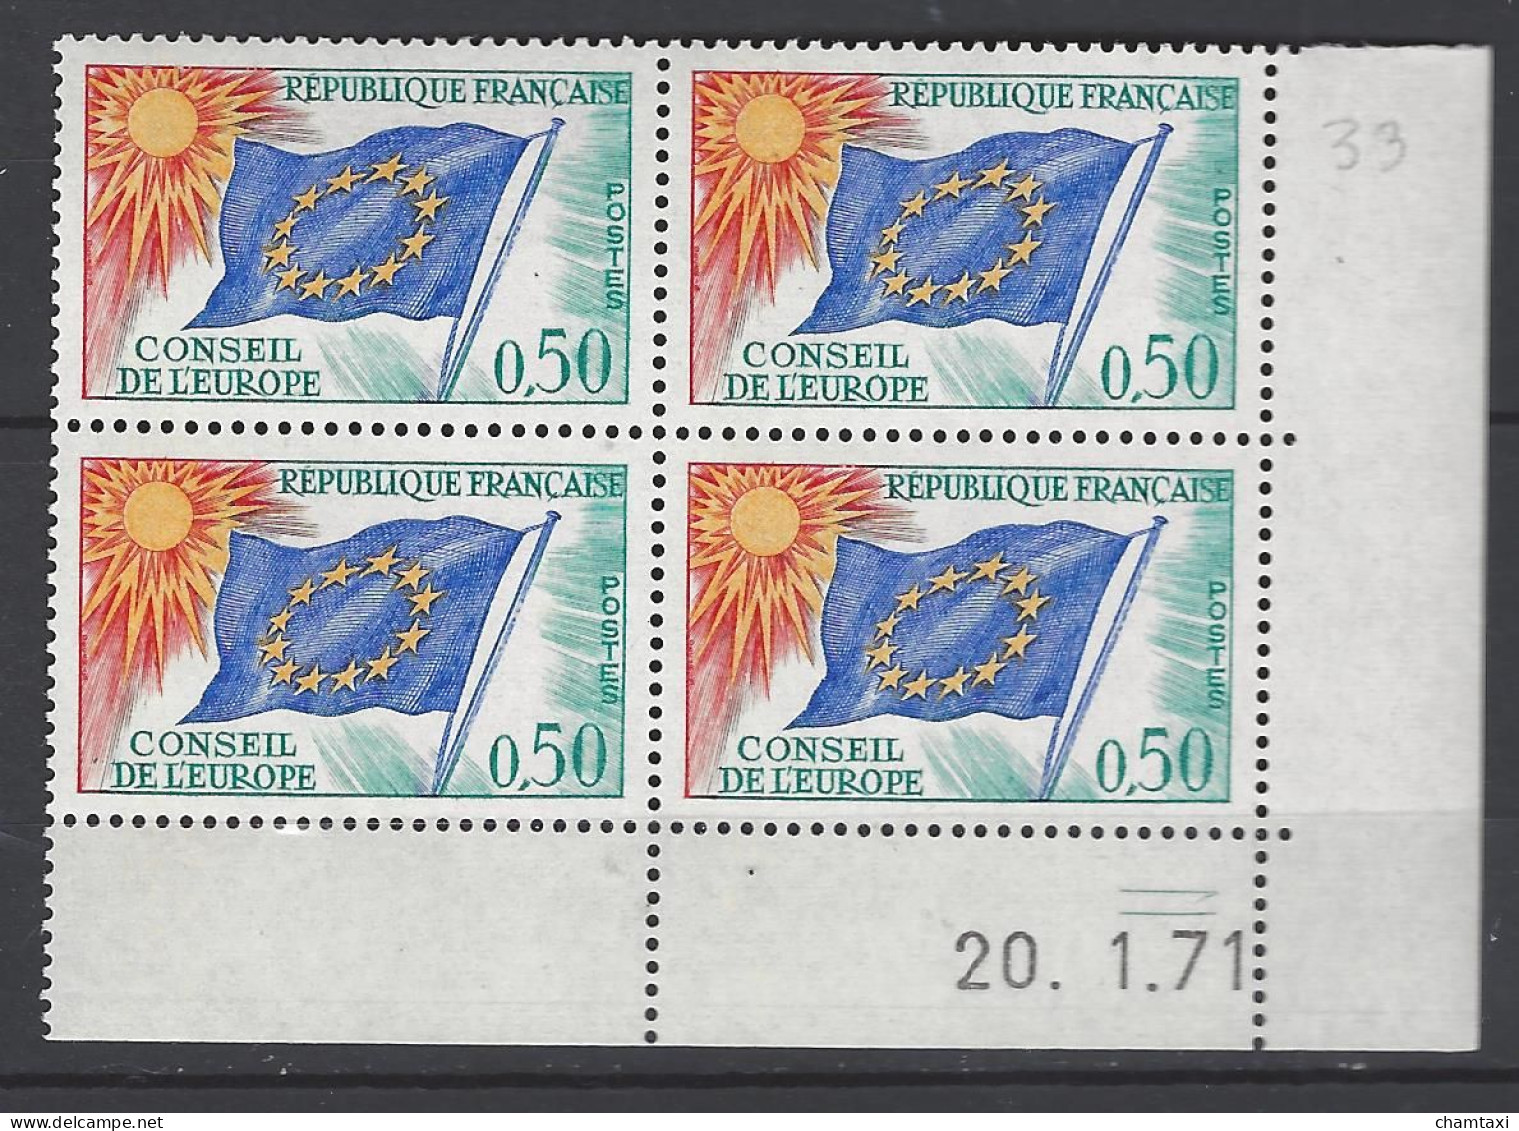 CD 33 FRANCE 1971 TIMBRE SERVICE CONSEIL DE L EUROPE DRAPEAU TYPE 1958 1959  COIN DATE 33 : 20 / 1 / 71 - Servicio